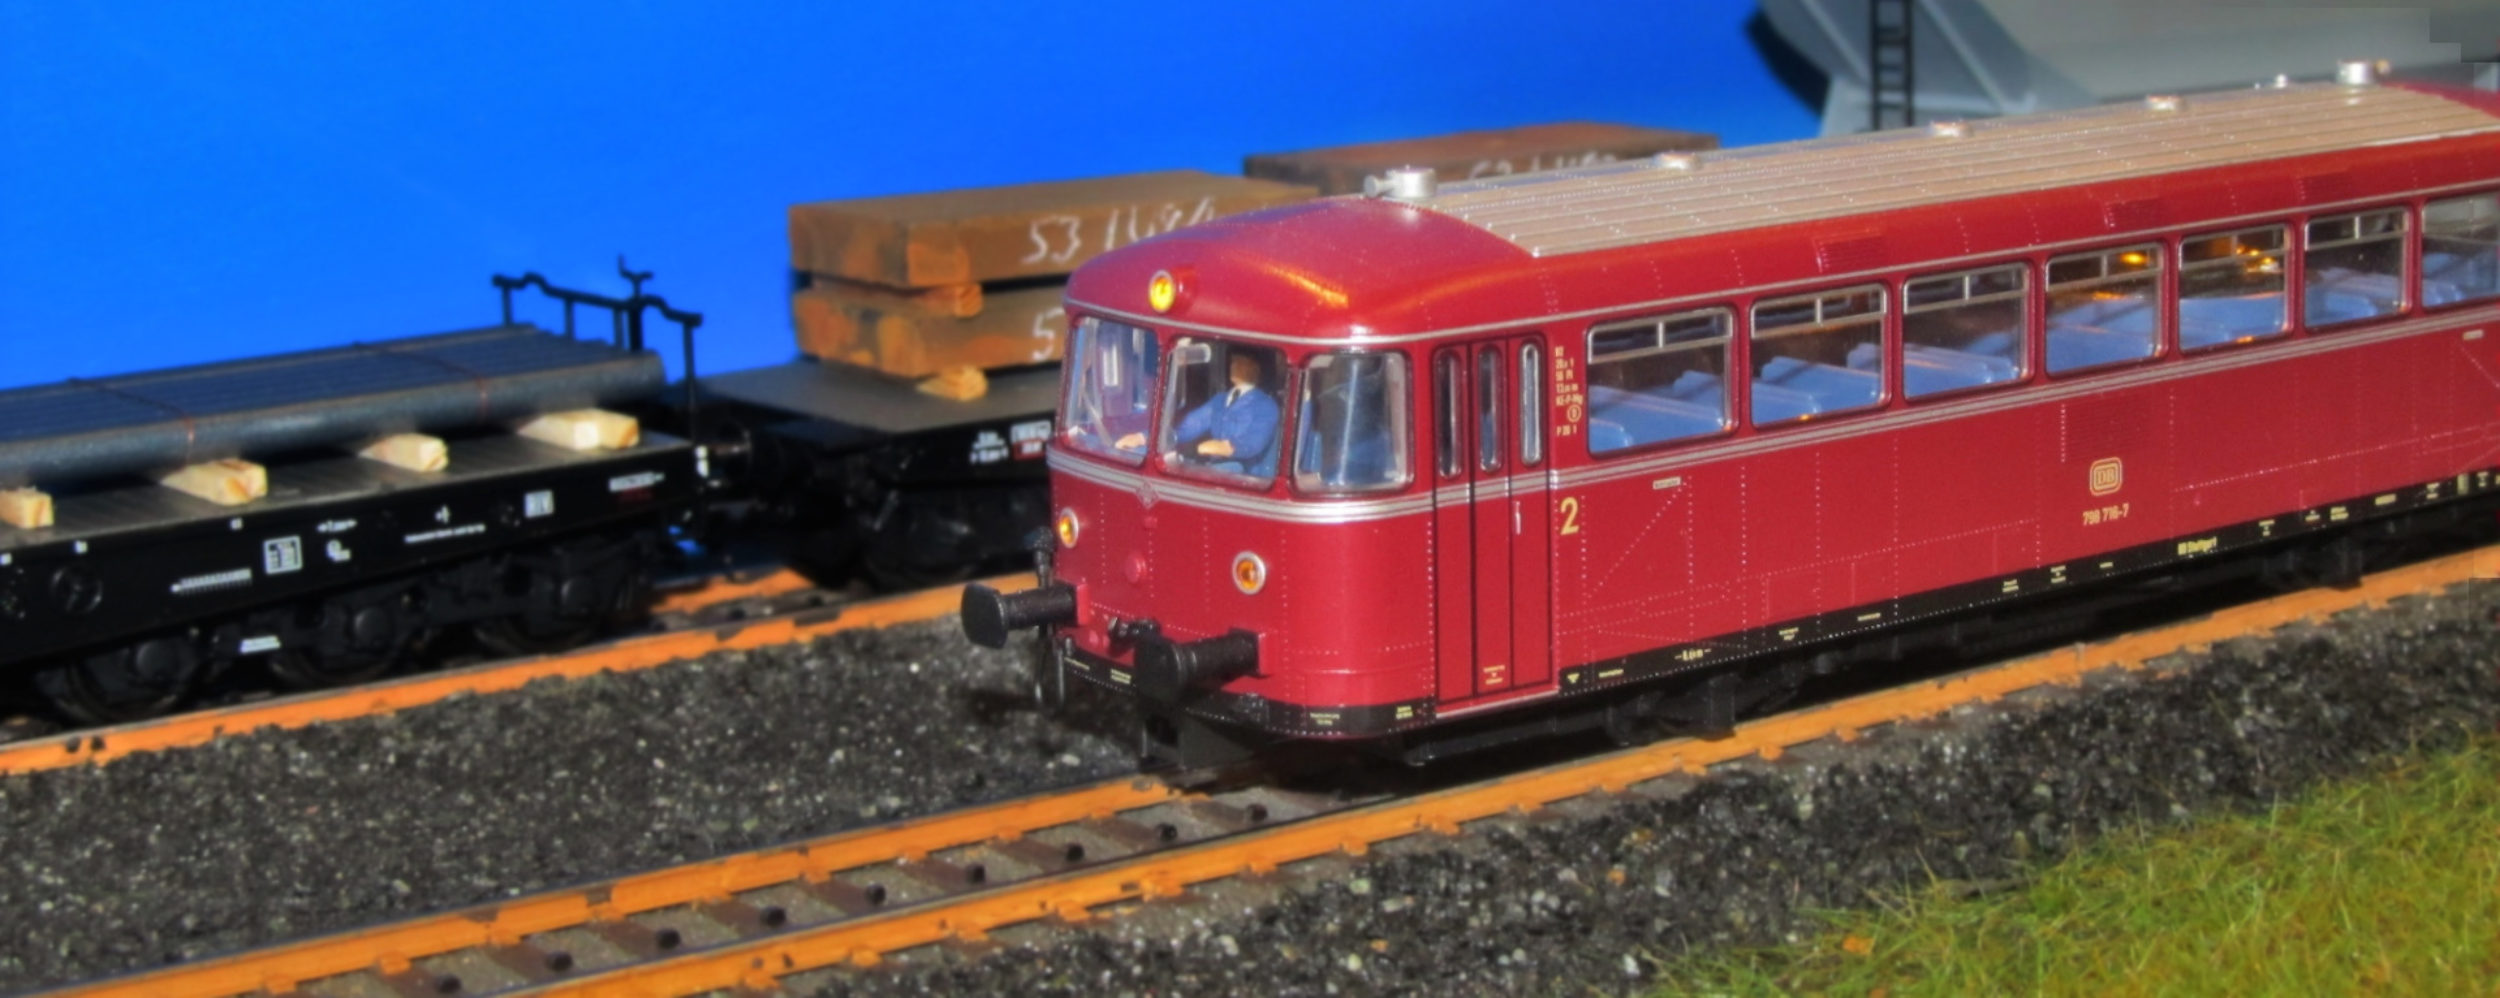 IGMS – I. G. Modellbahn Siegerland